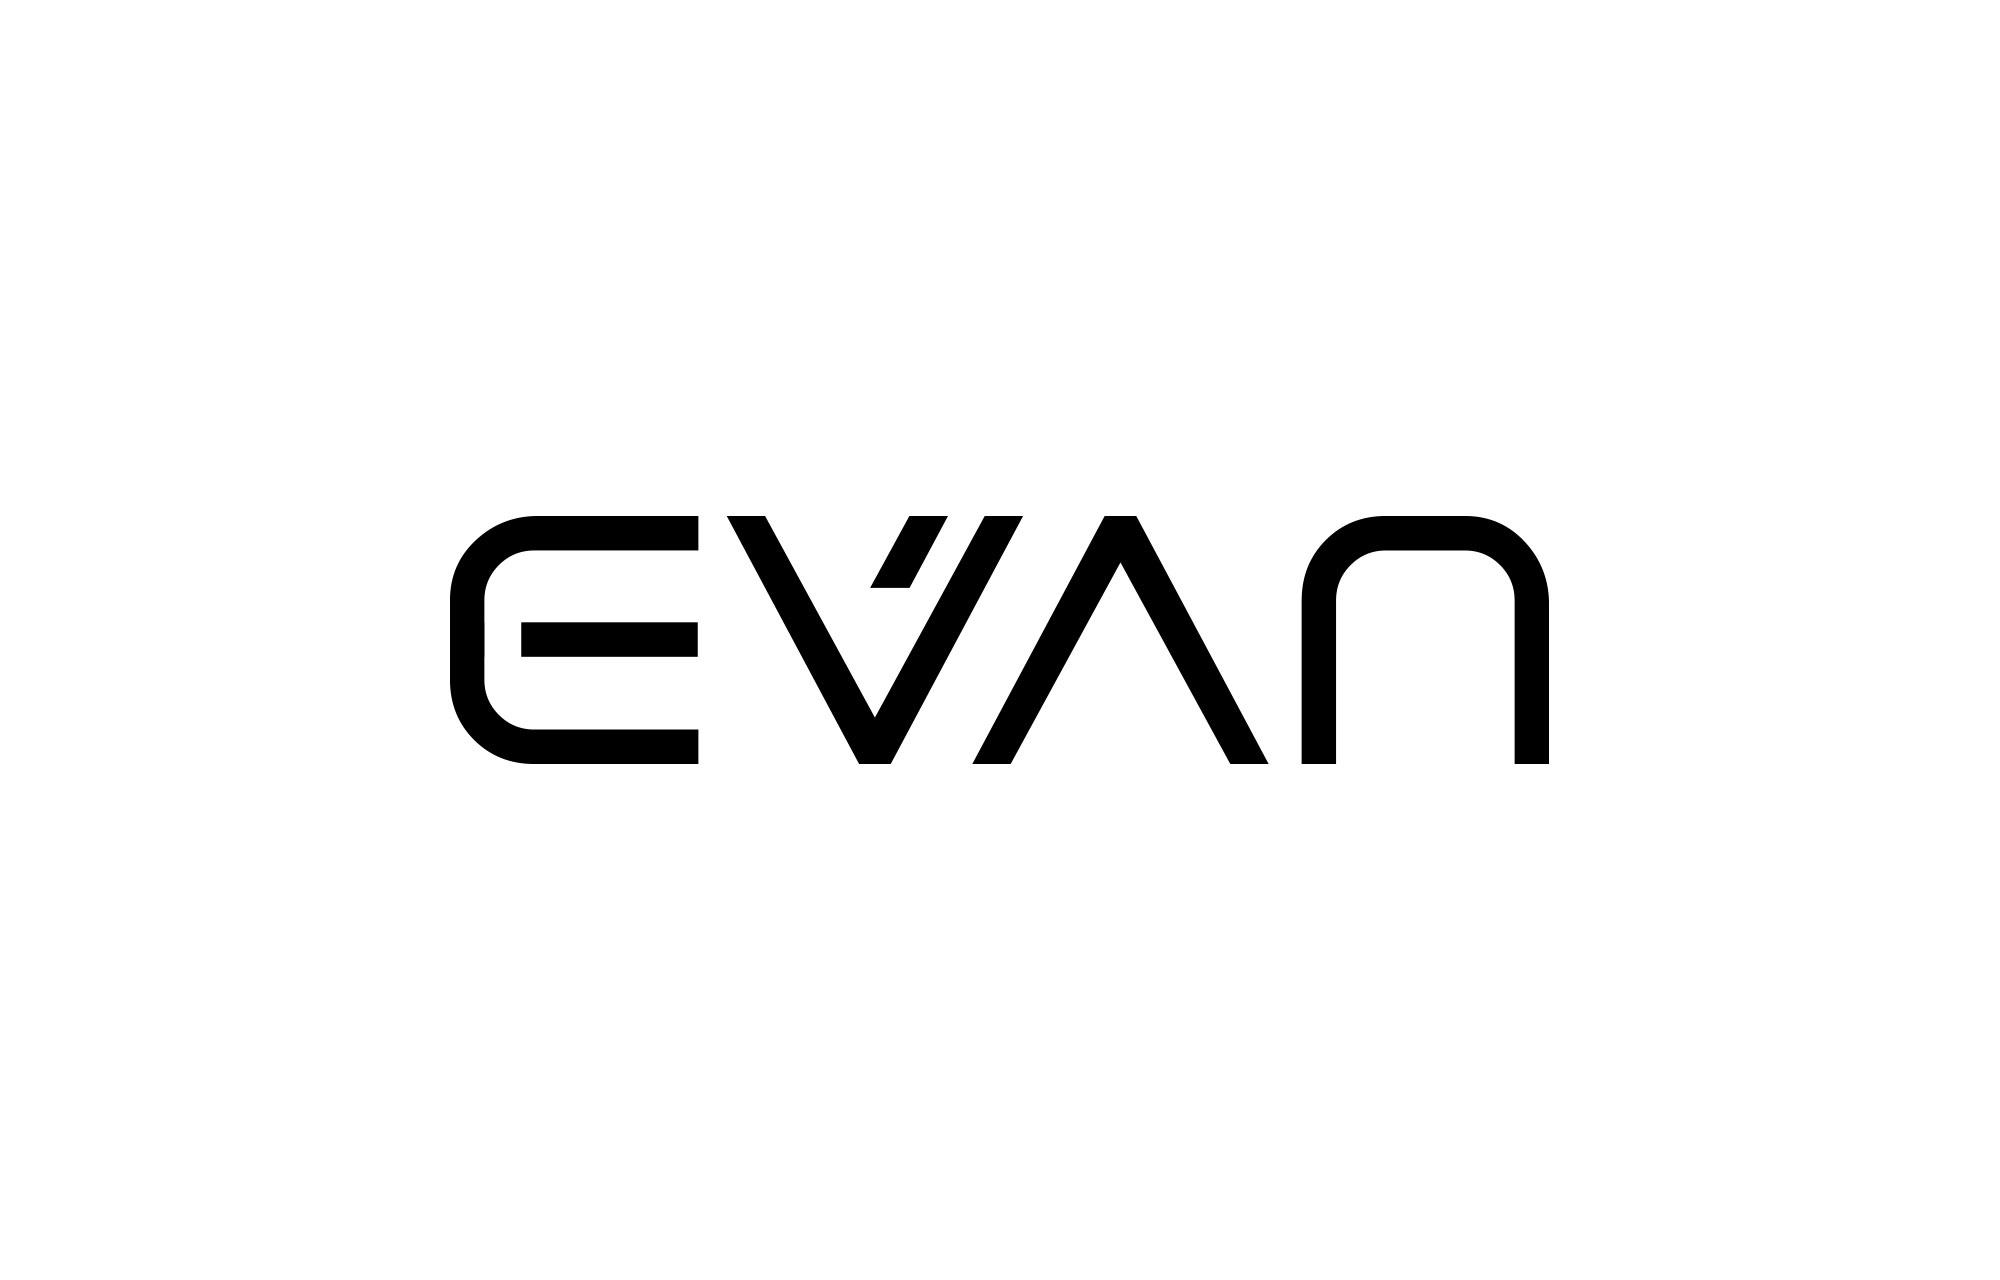 Evan Logo - Evan